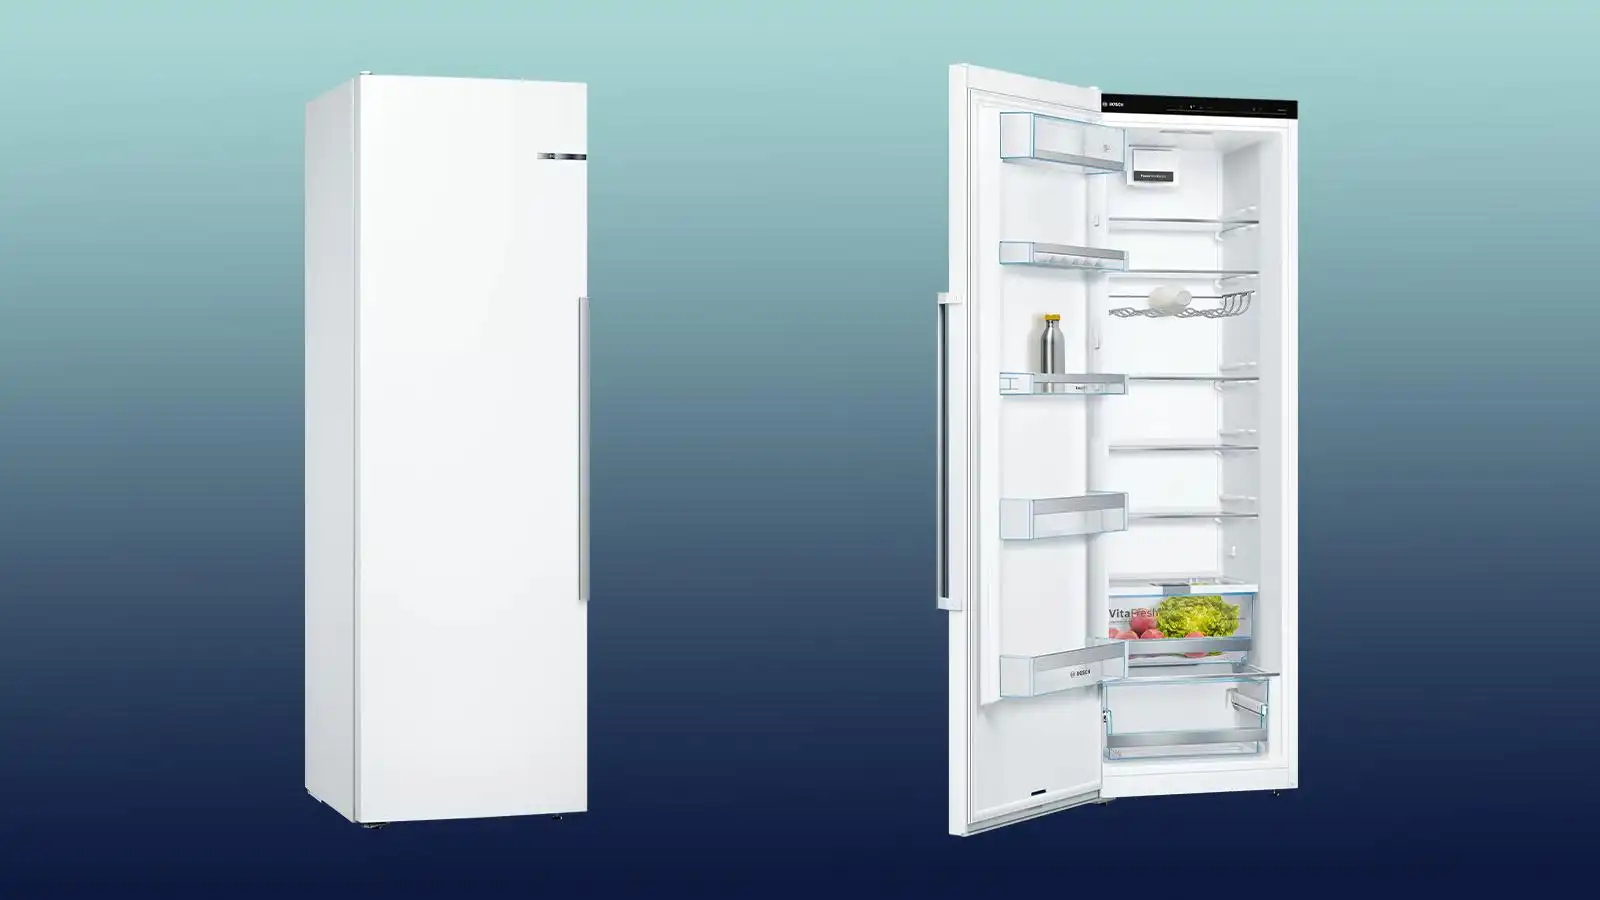 The Best Bosch Refrigerators Counter-Depth Reviewed插图3